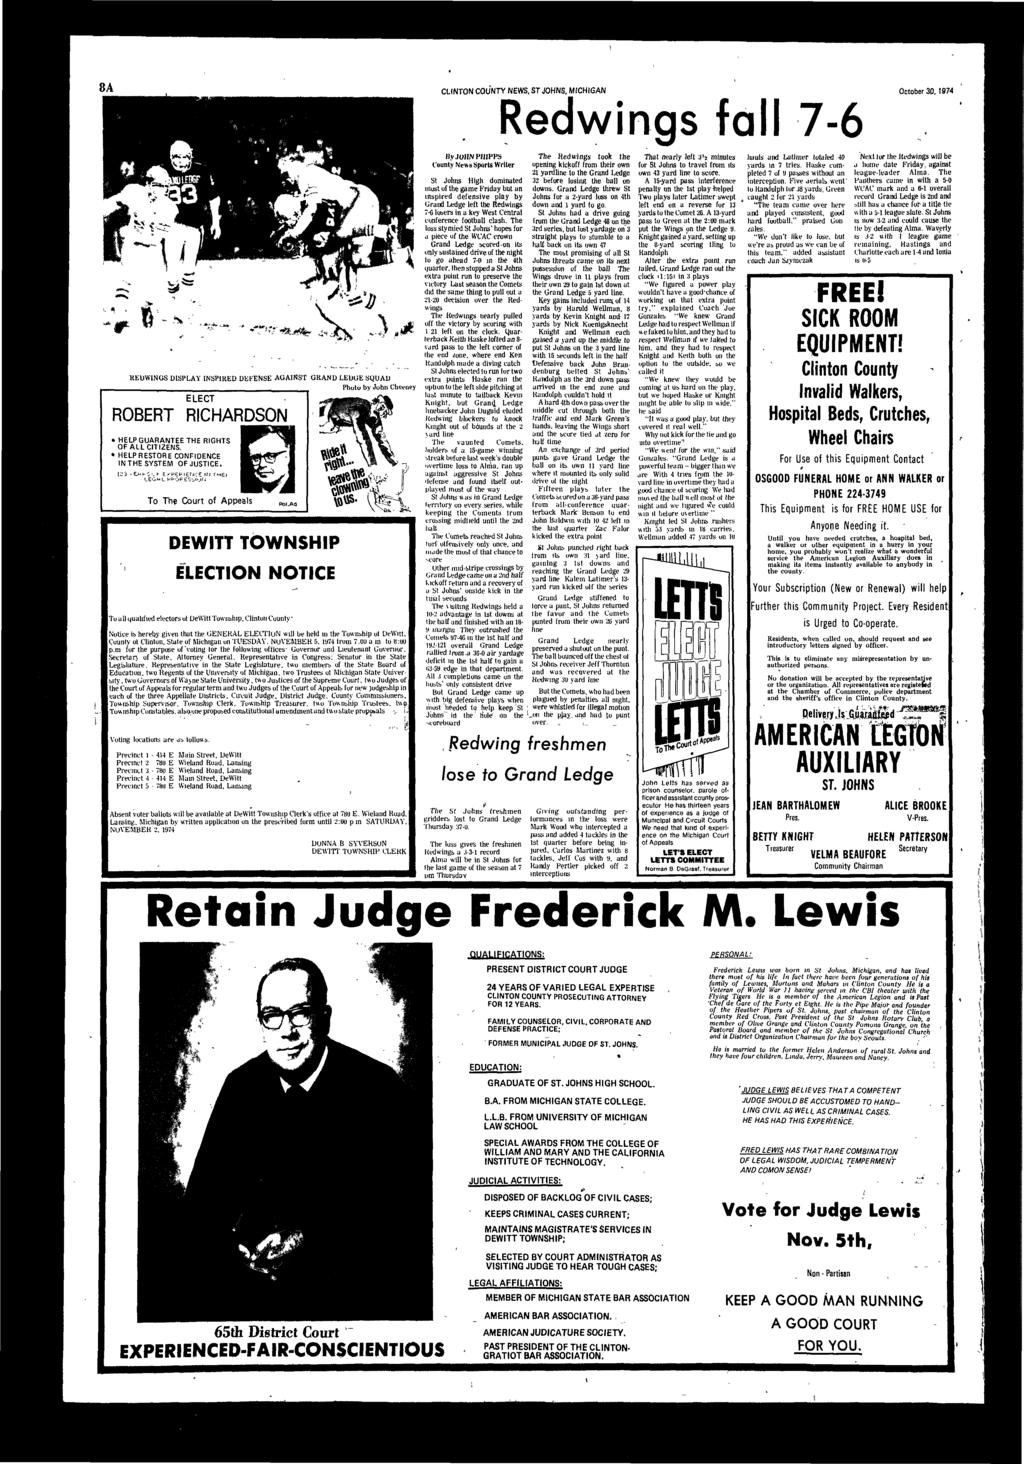 CLINTON COUNTY NEWS, ST JOHNS, MICHIGAN October 30,1974 Redwings fll 7-6 **»* -**-*«.^tojk,m.